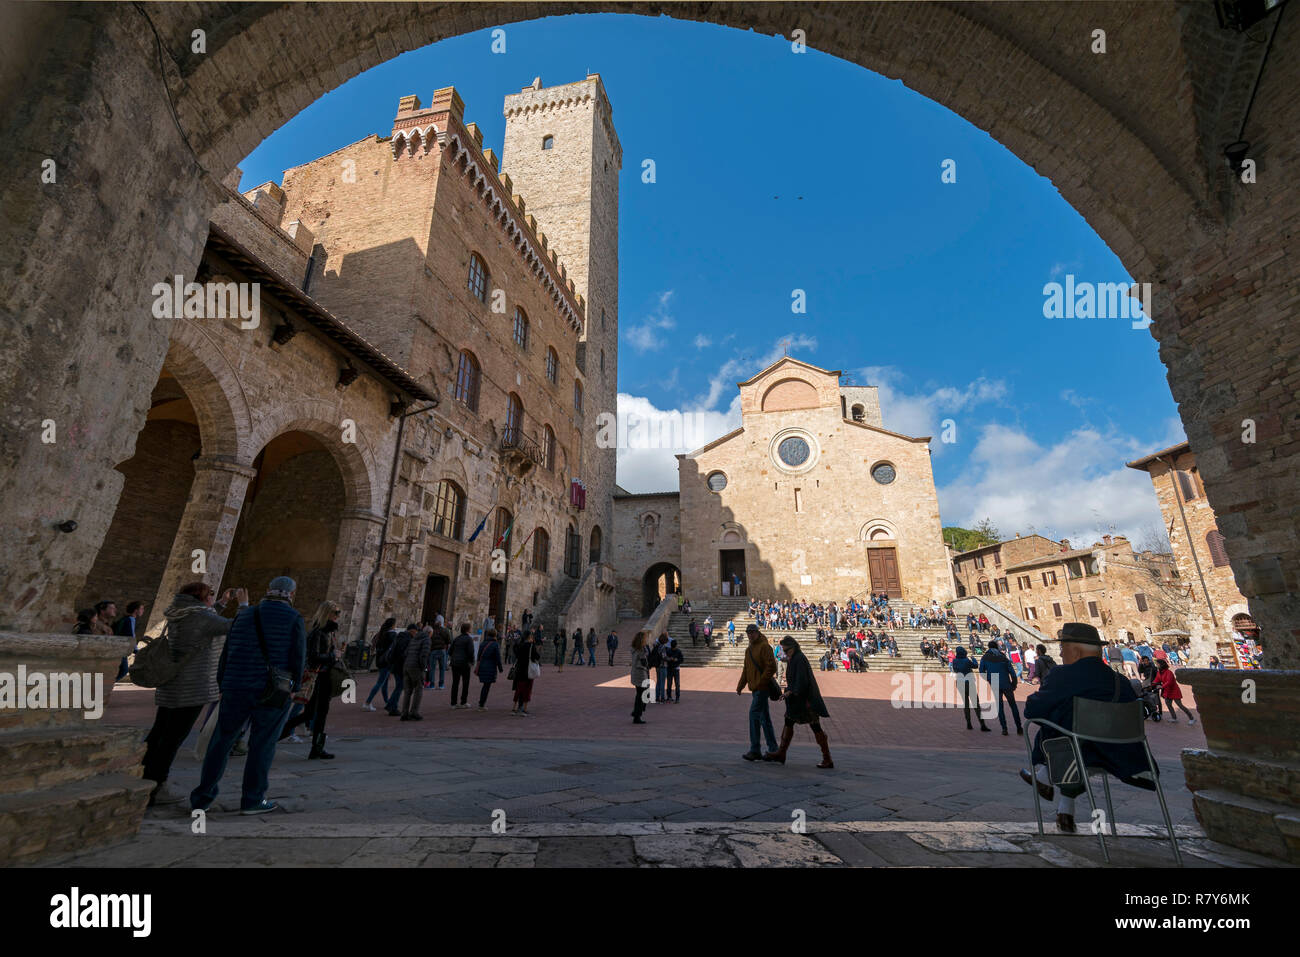 Vue horizontale de la Piazza del Duomo de San Gimignano, Italie. Banque D'Images